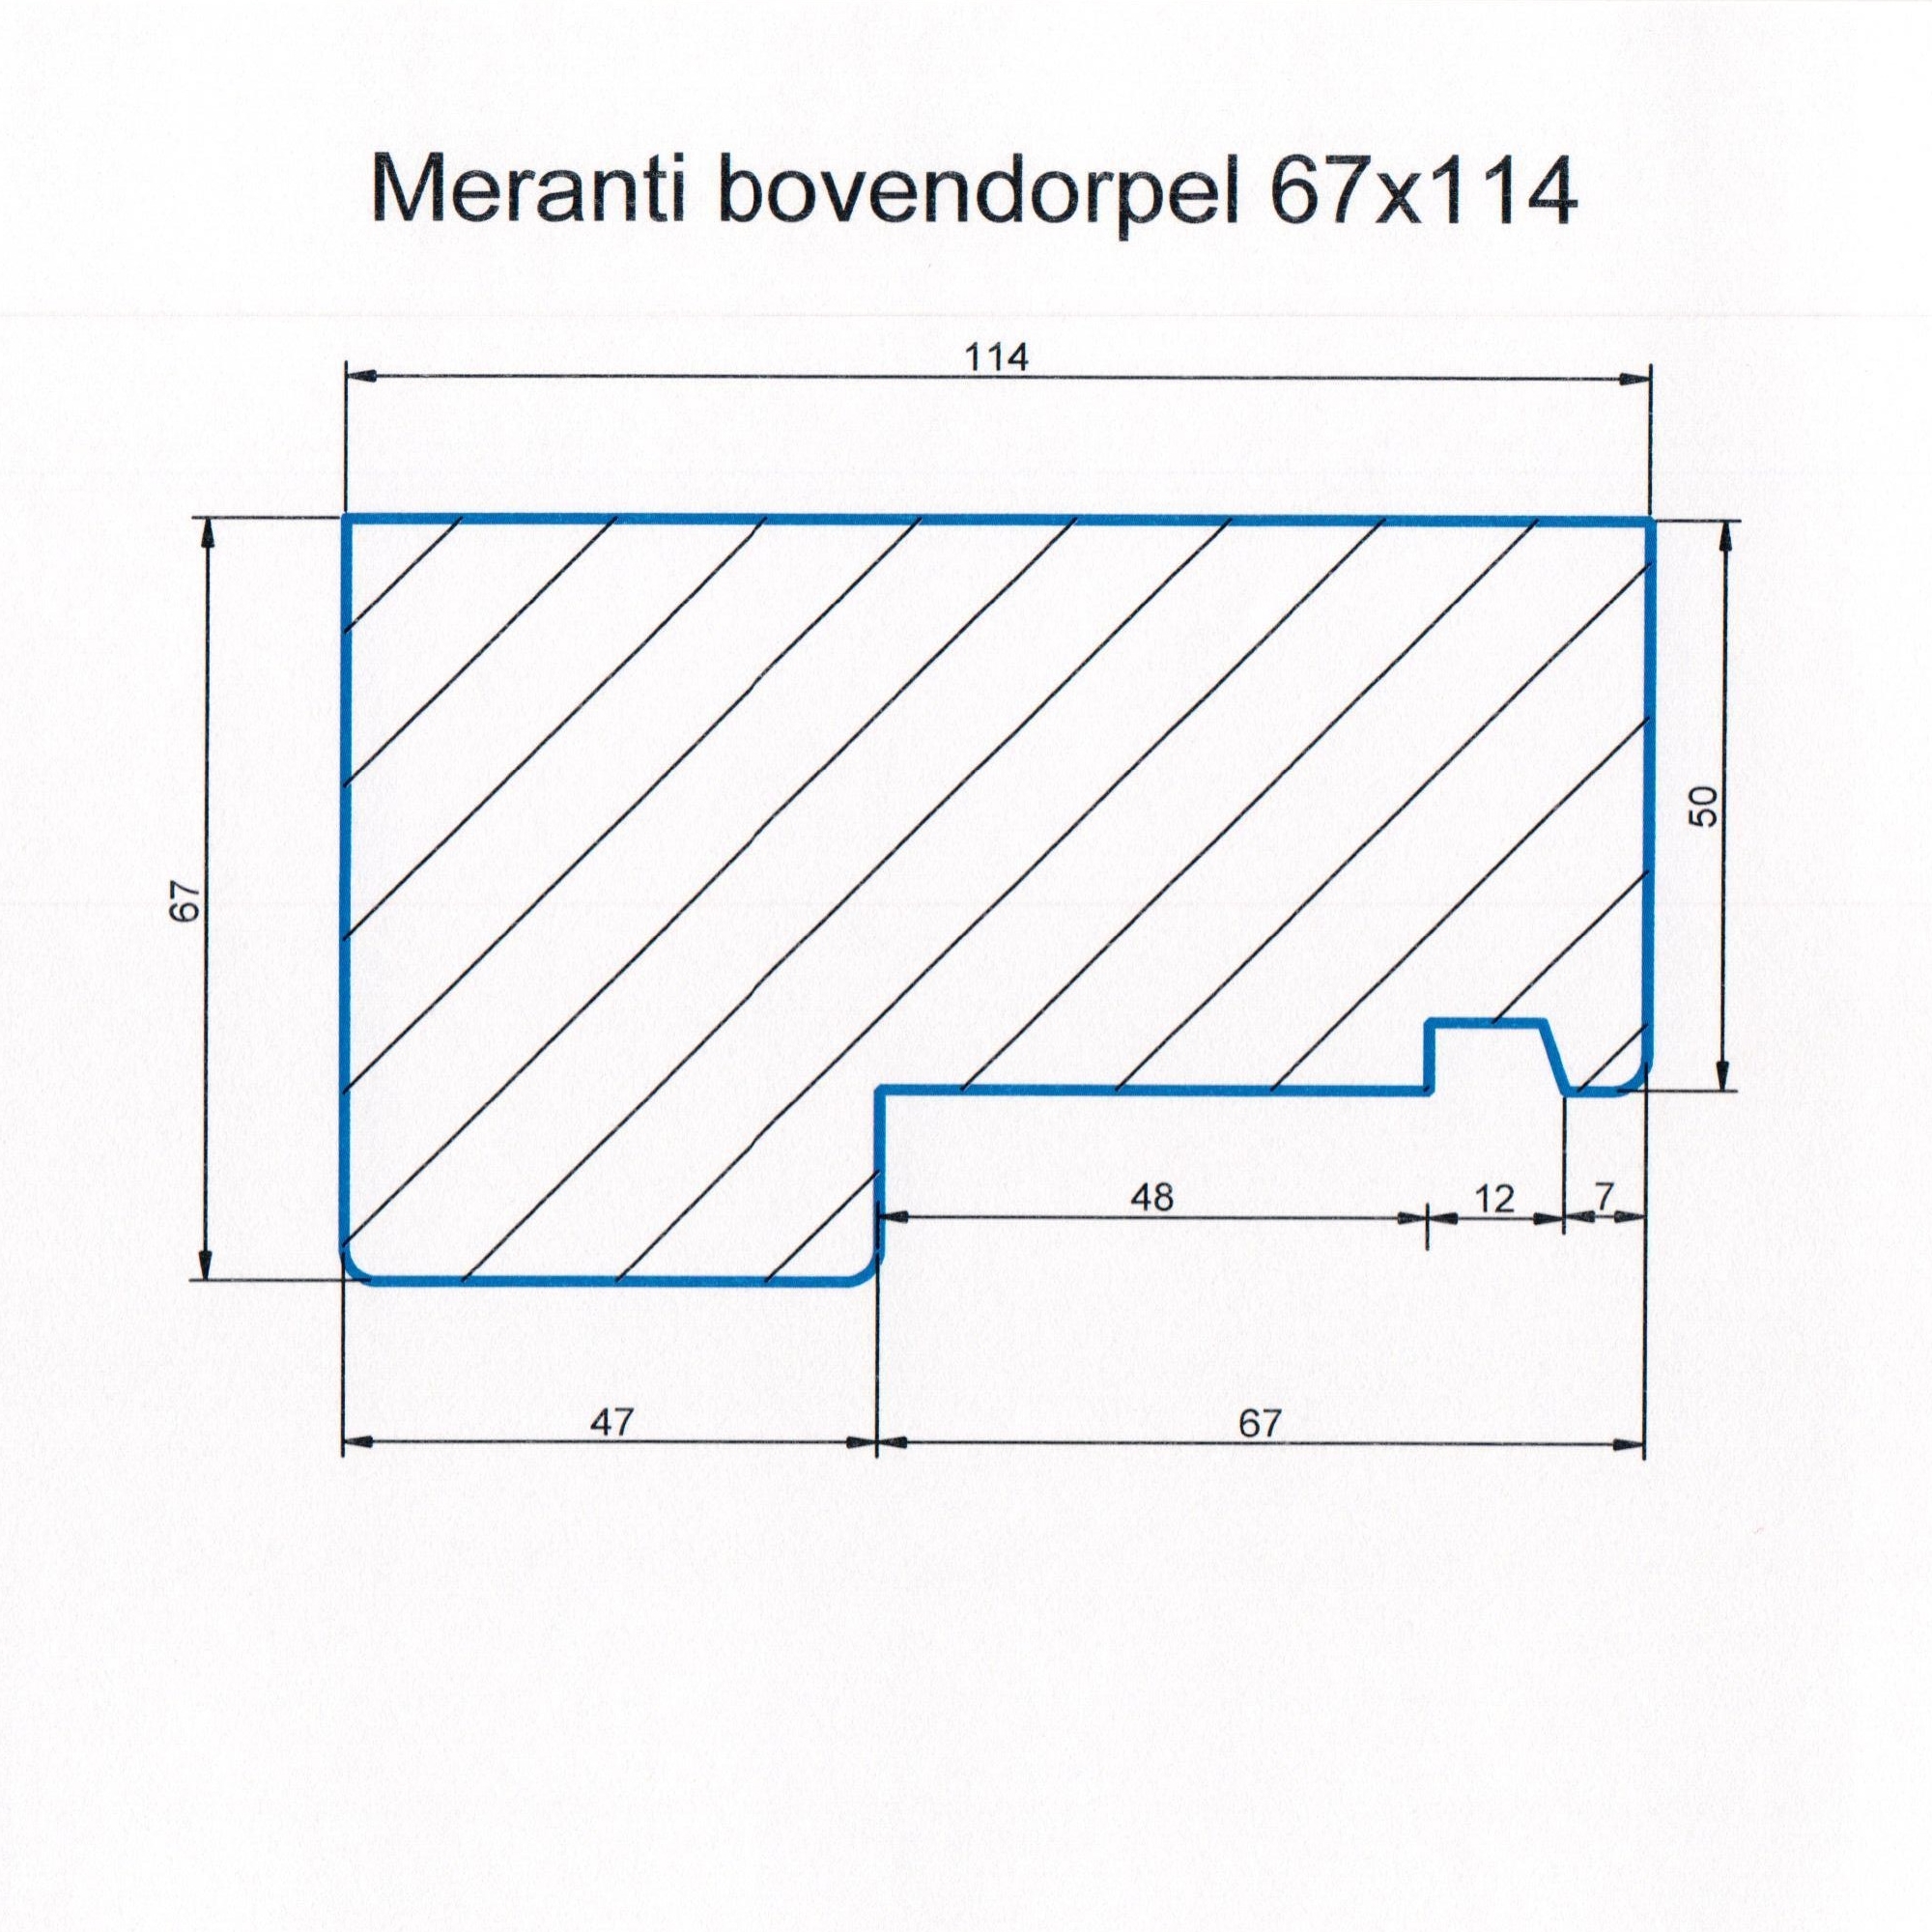 Meranti 67x114 kozijnhout bovendorpel L=4300 mm